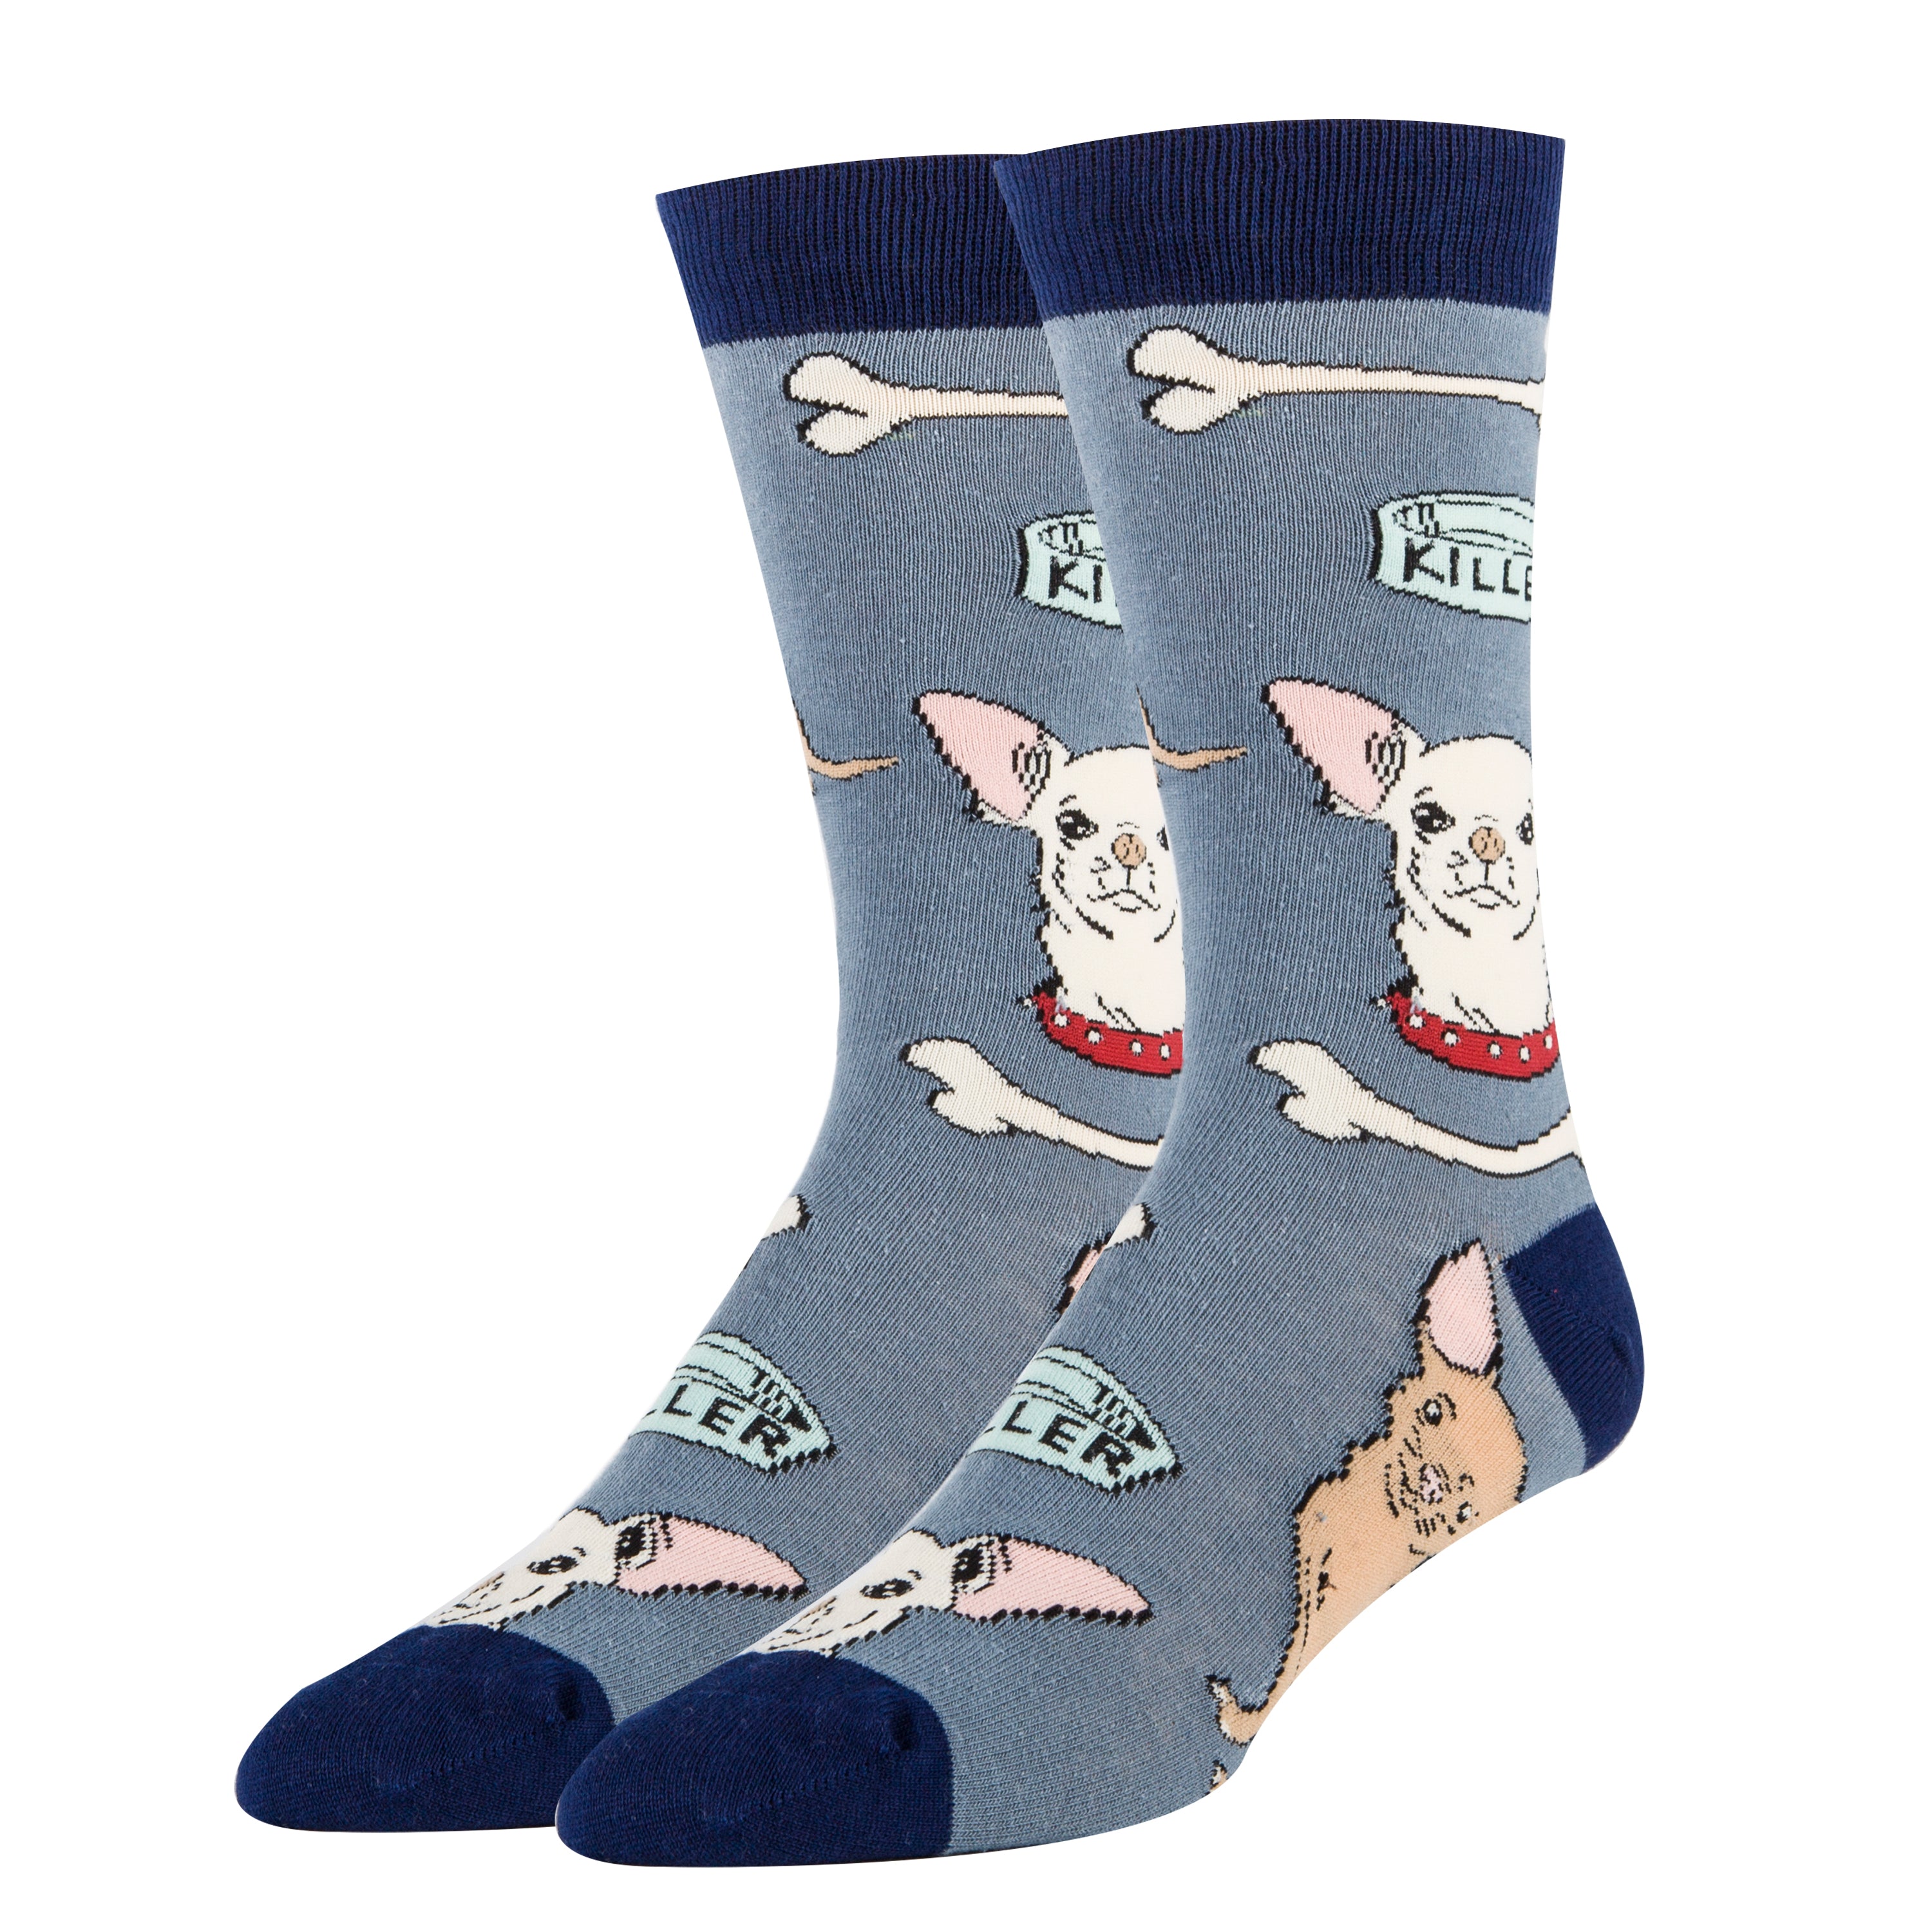 Tiger Socks  Crazy Cool Animal Socks for Men by ModSocks - Cute